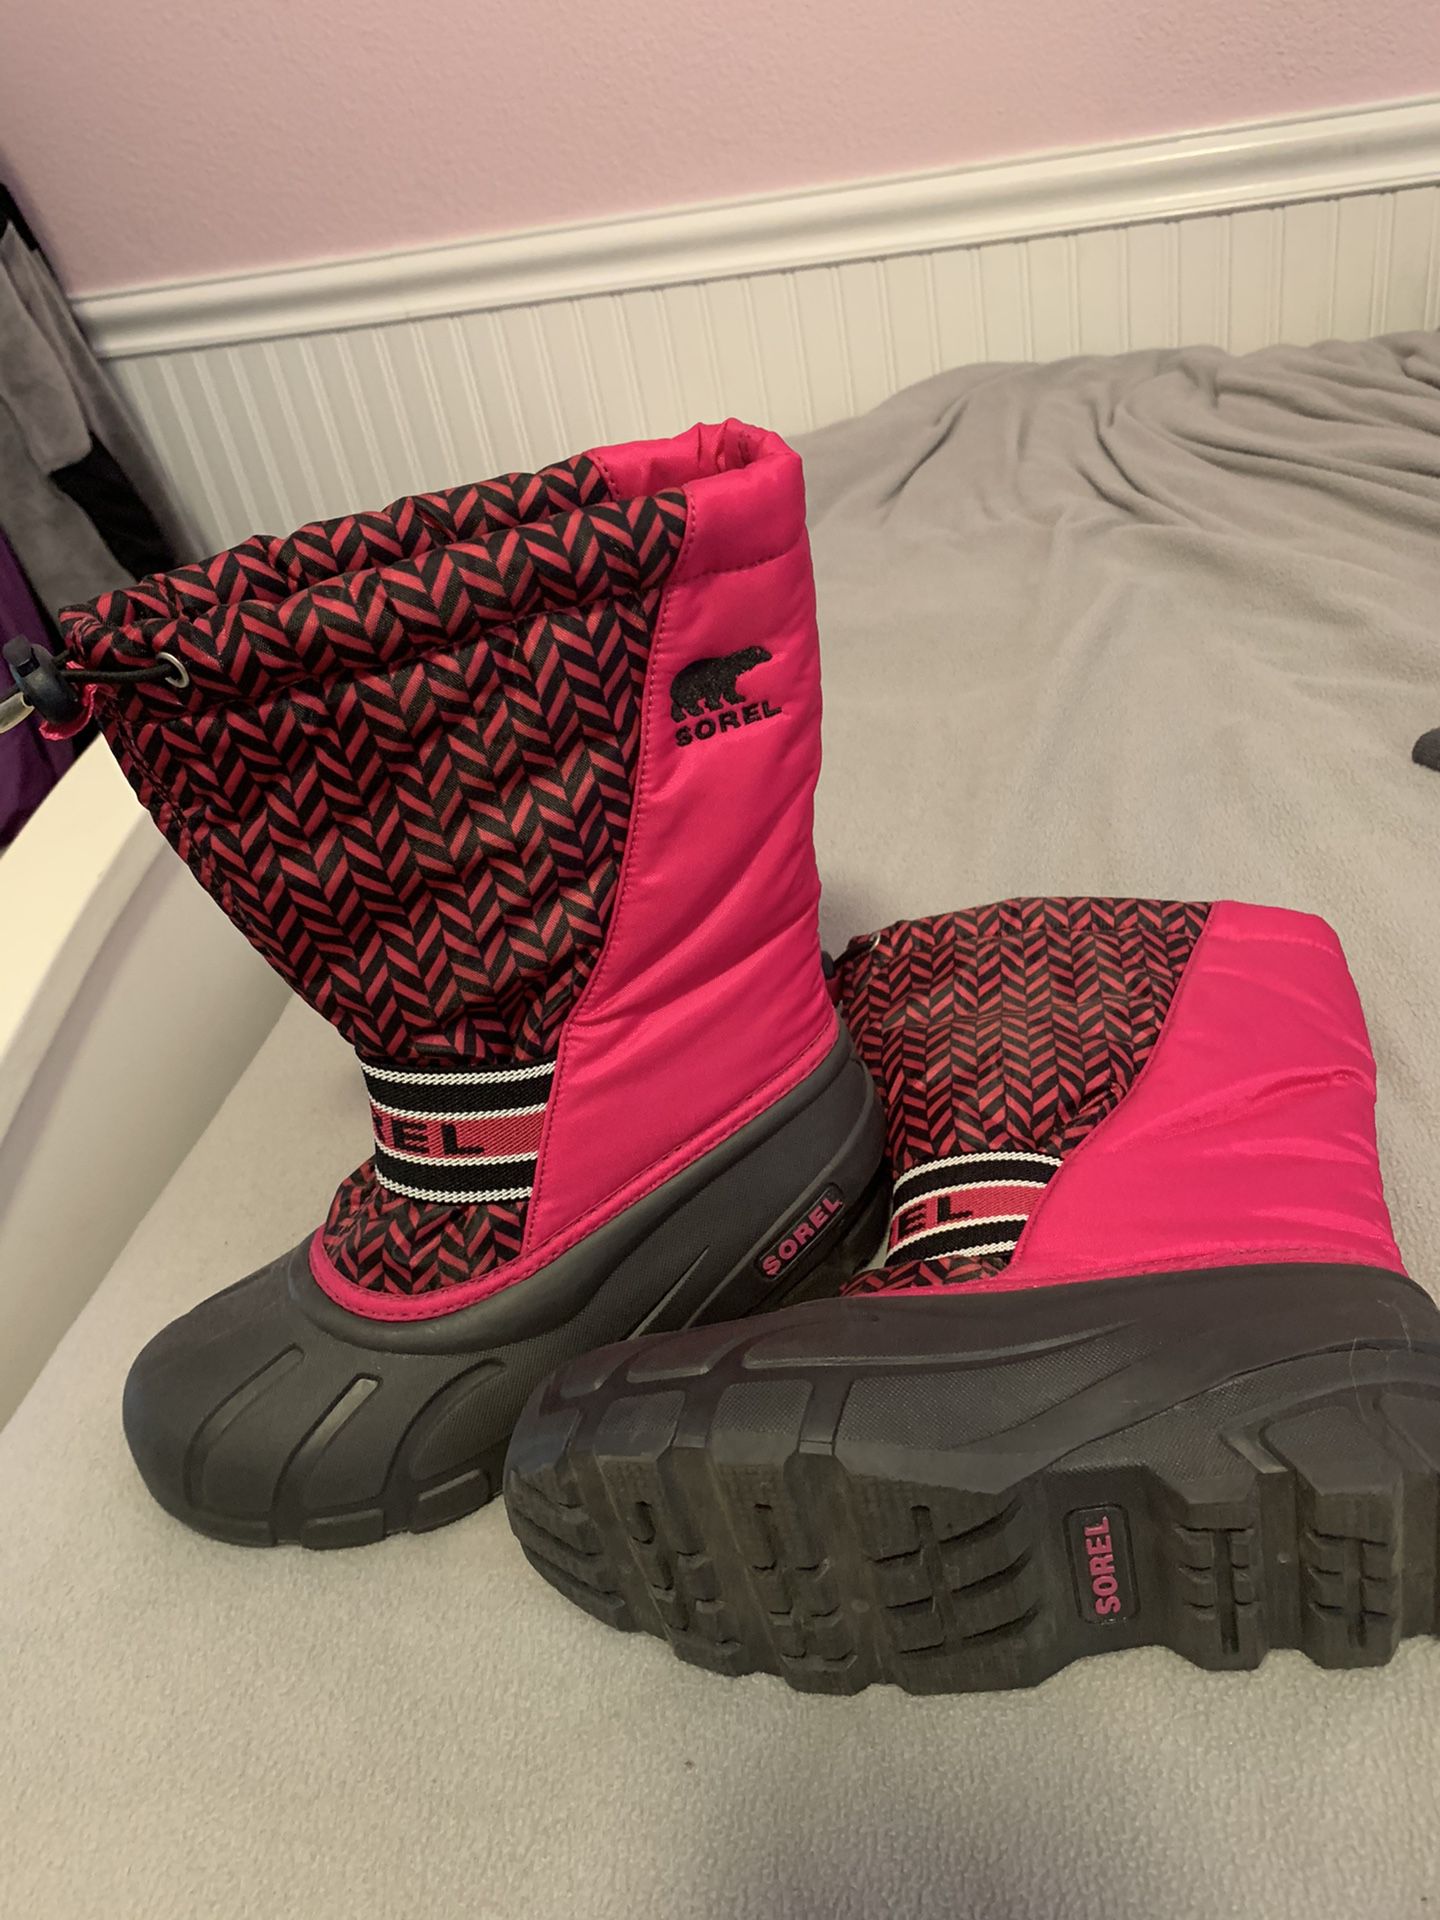 Sorel snow boots.